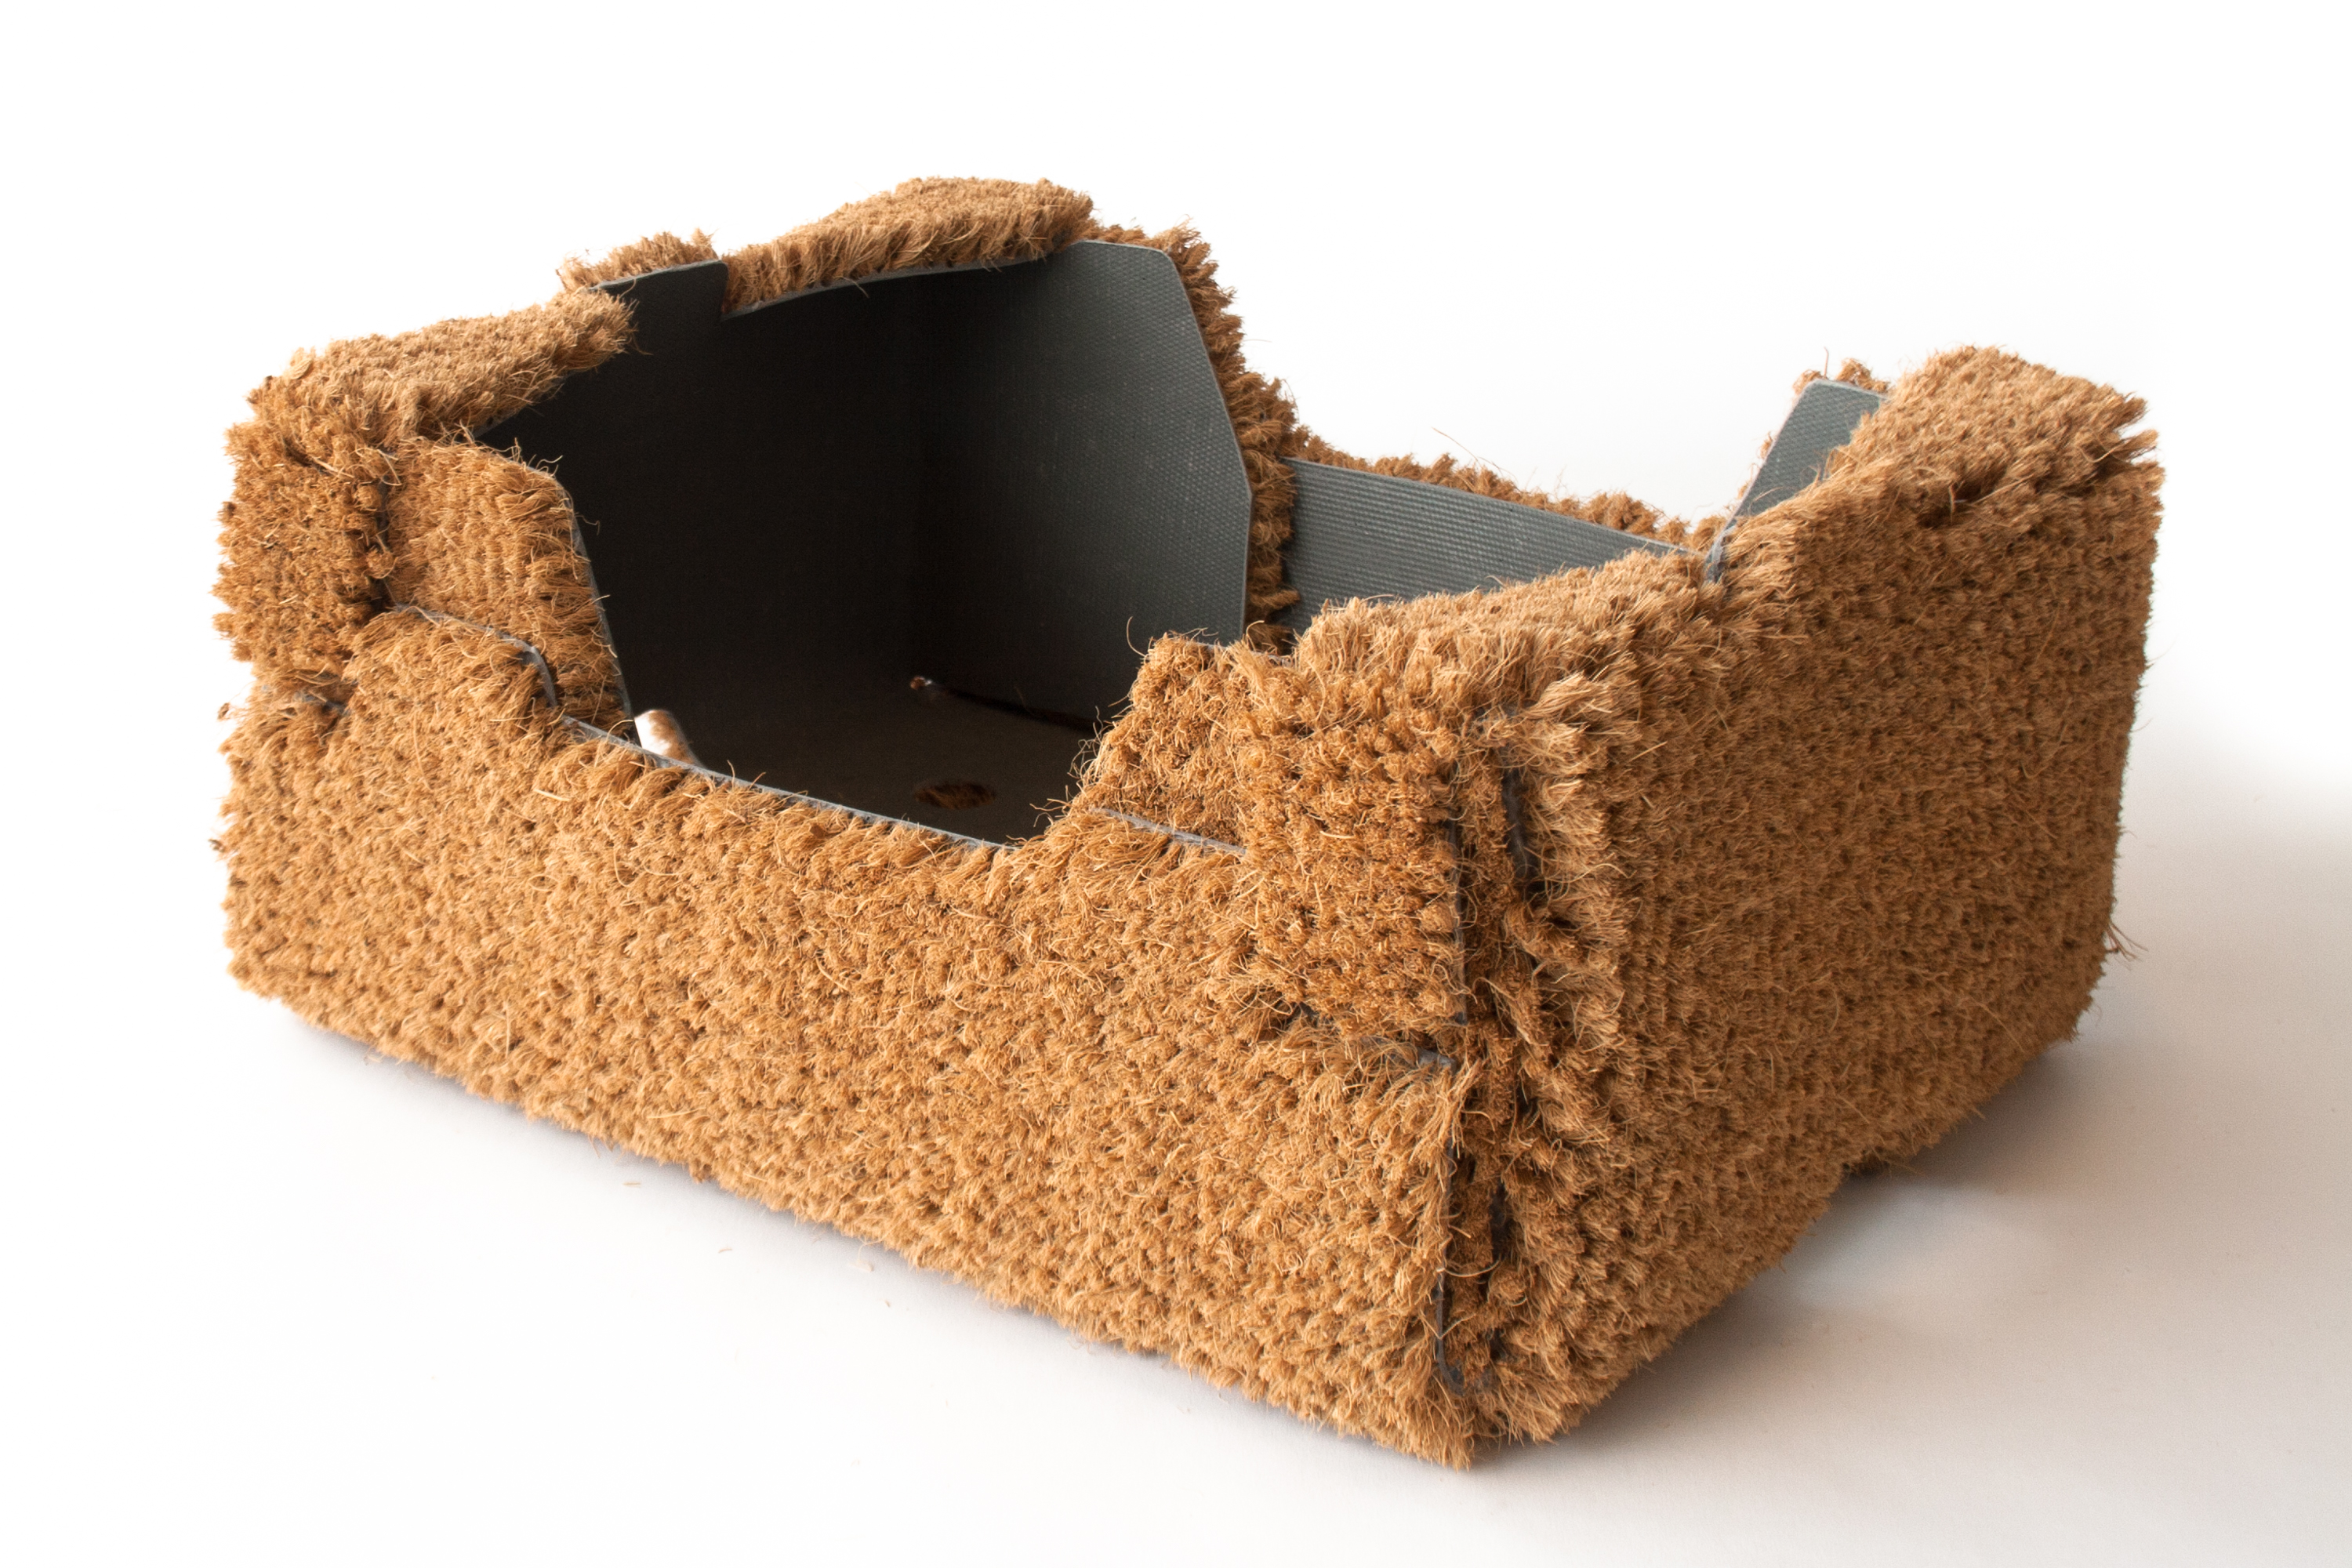 Doosmat, a cardboard box made from a doormat, designed by Jarle Veldman